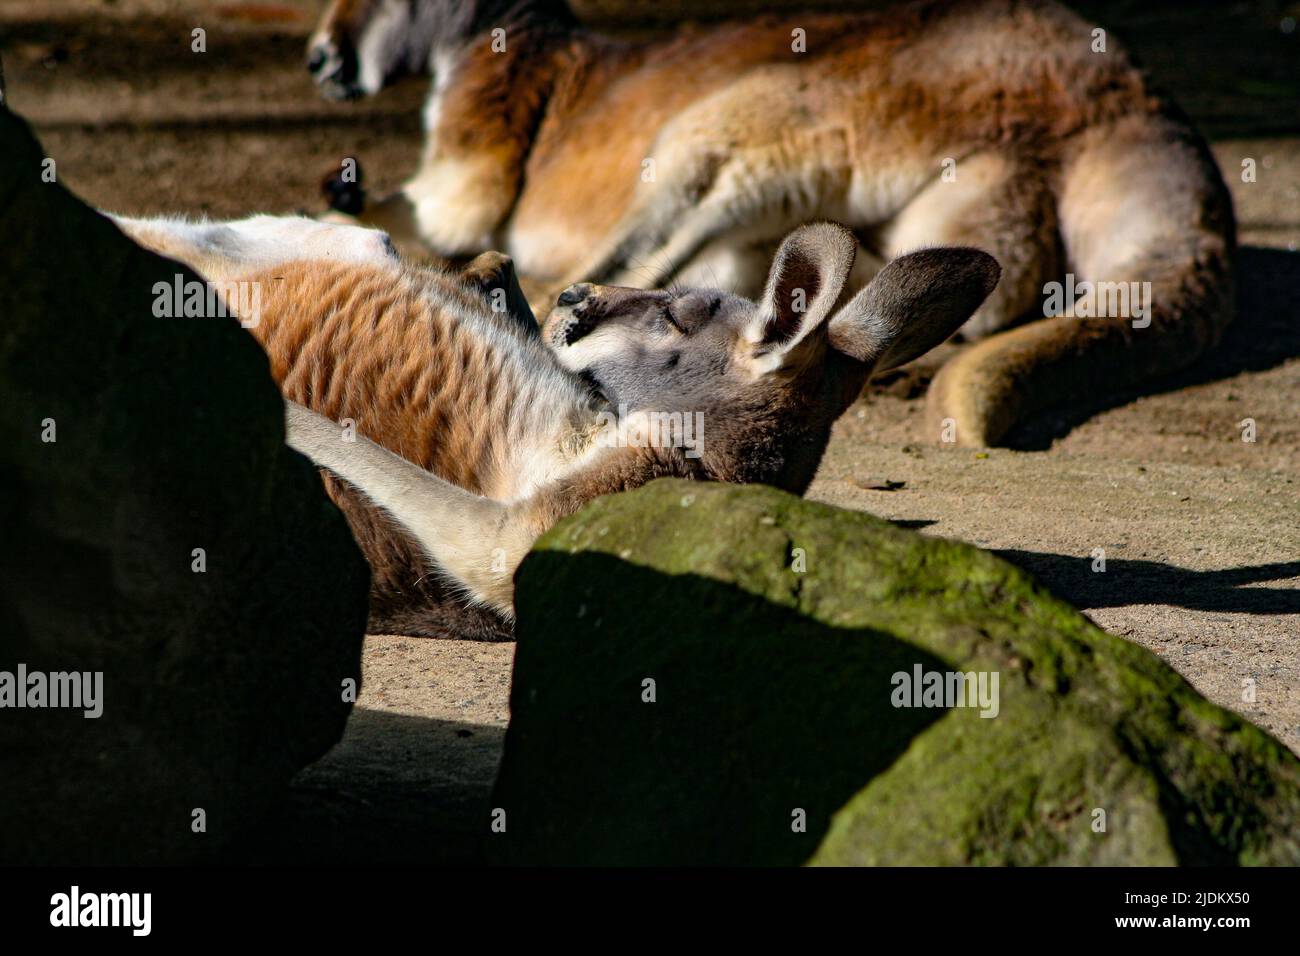 Kangaroo Sleeping on its back in the sun Stock Photo